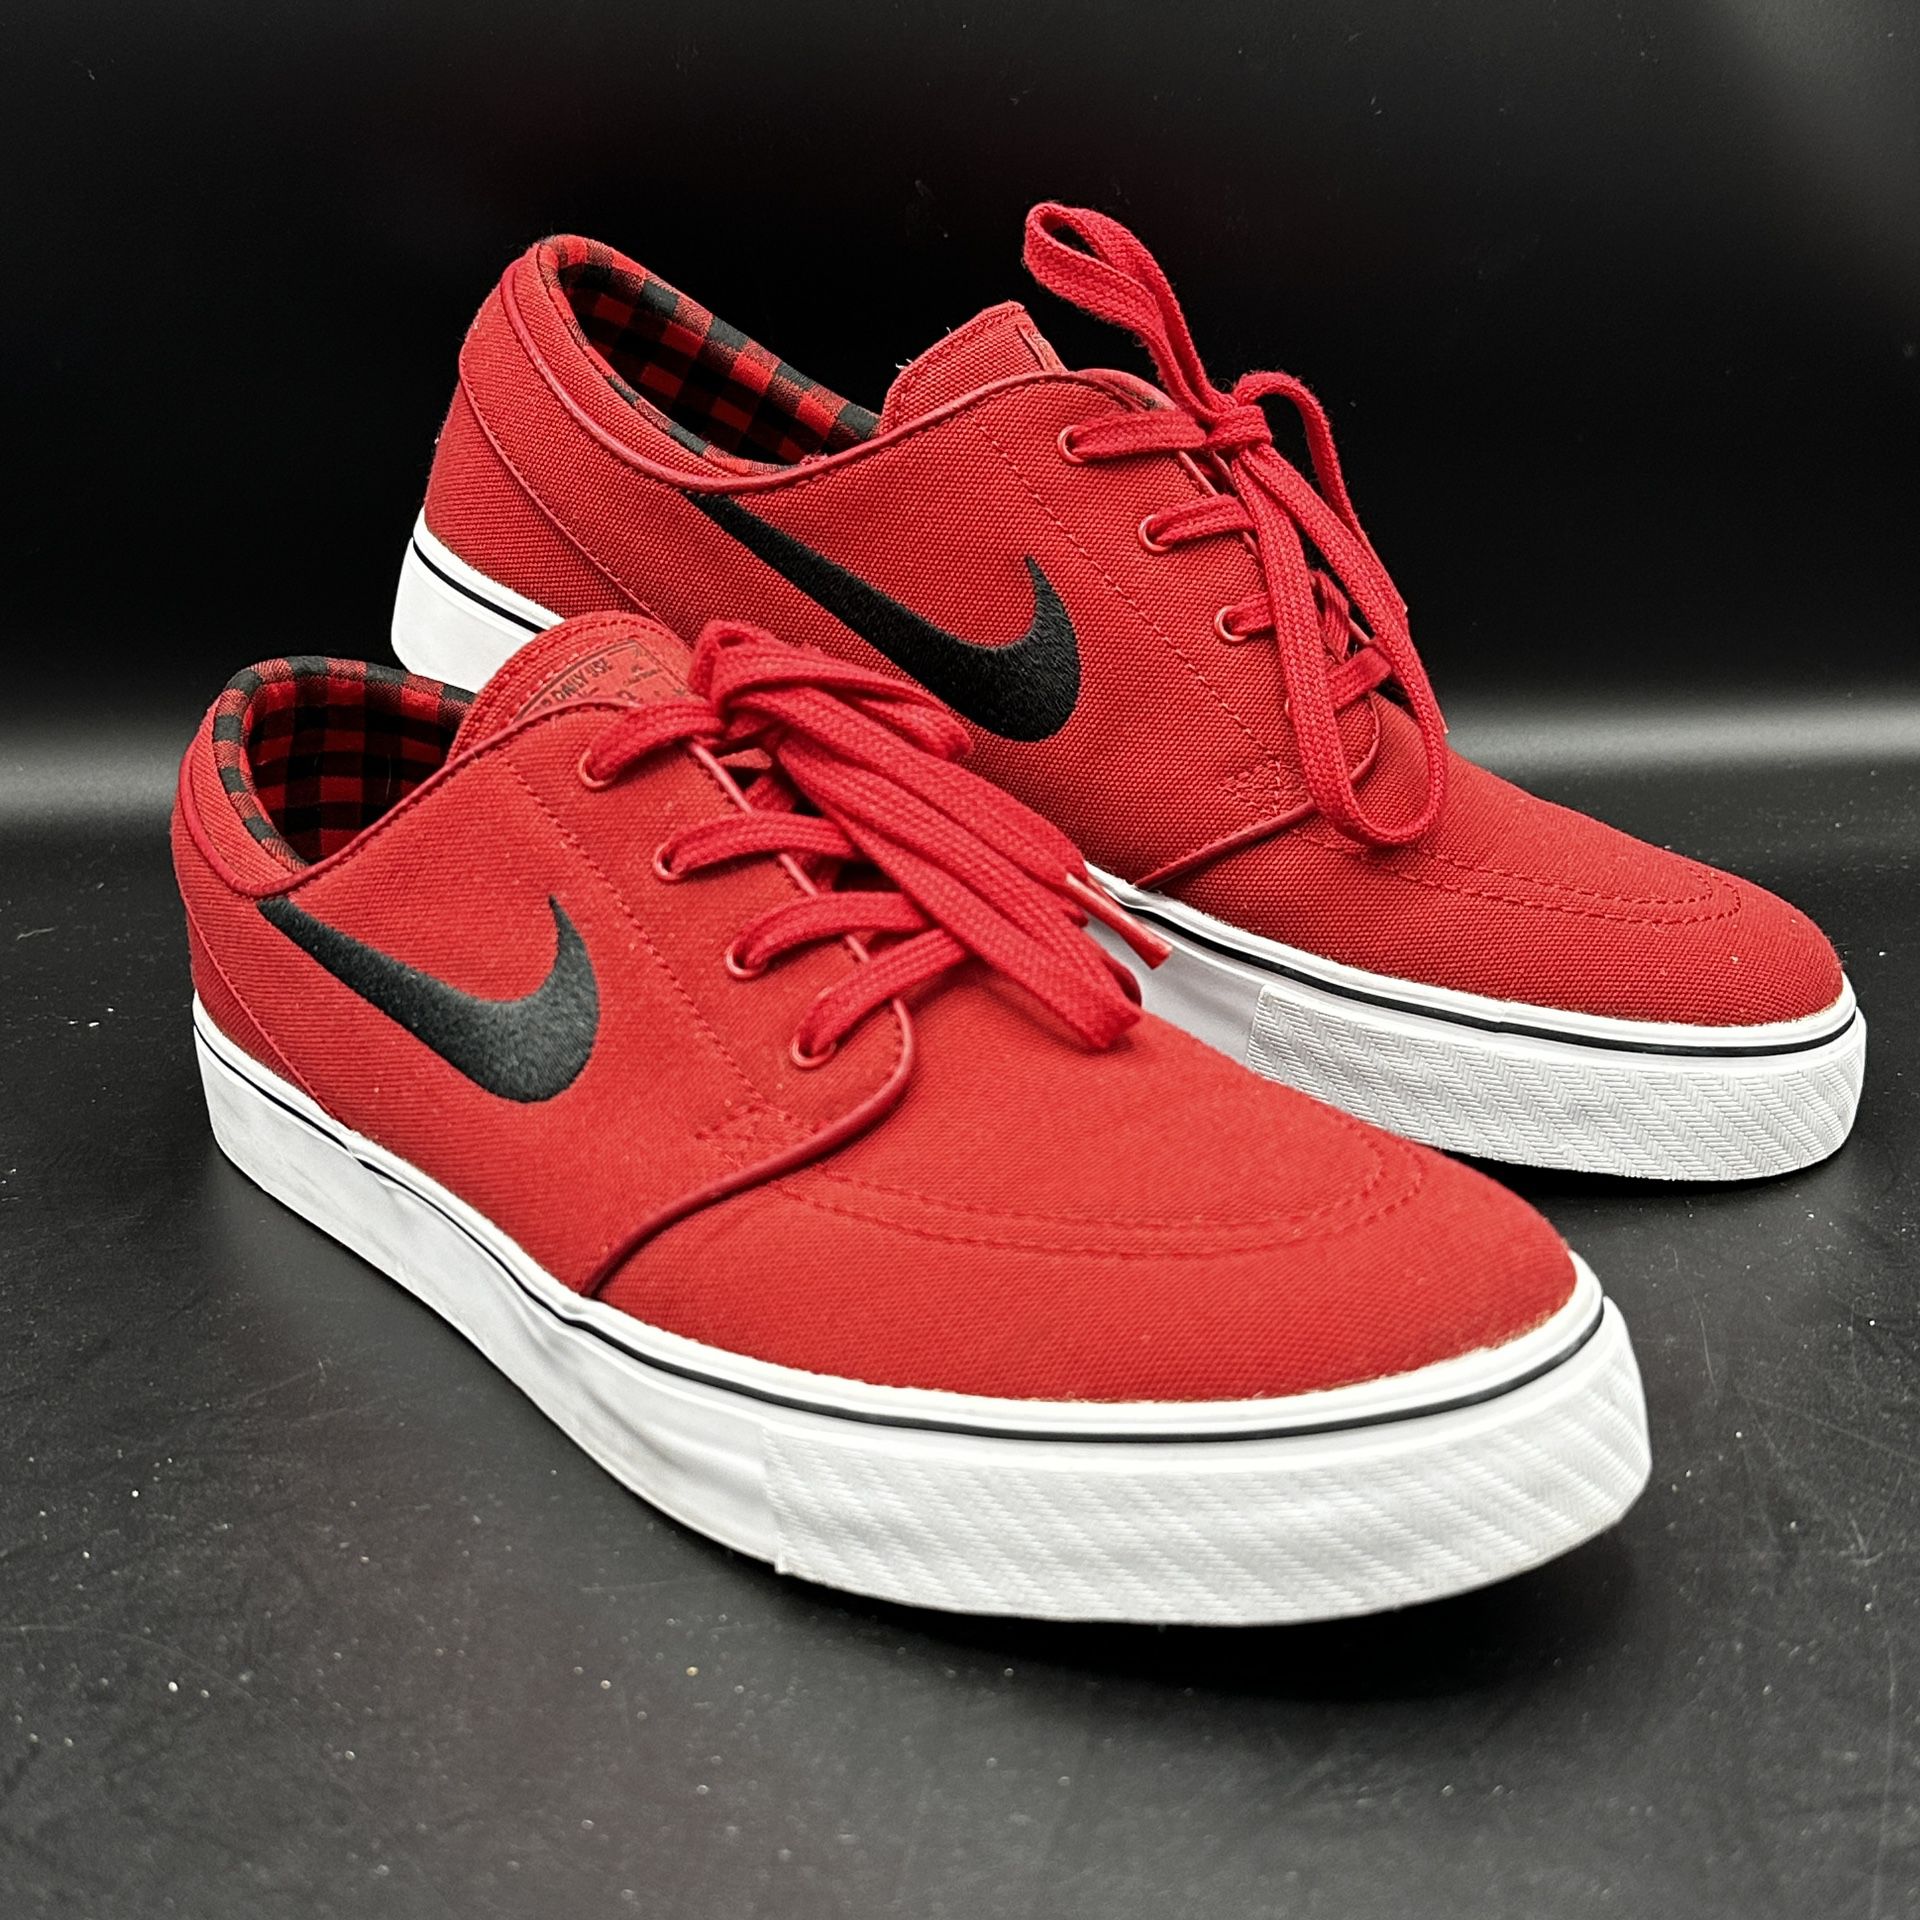 Nike SB Zoom Stefan Janoski Red Plaid Skate Shoes - Men’s Size 11